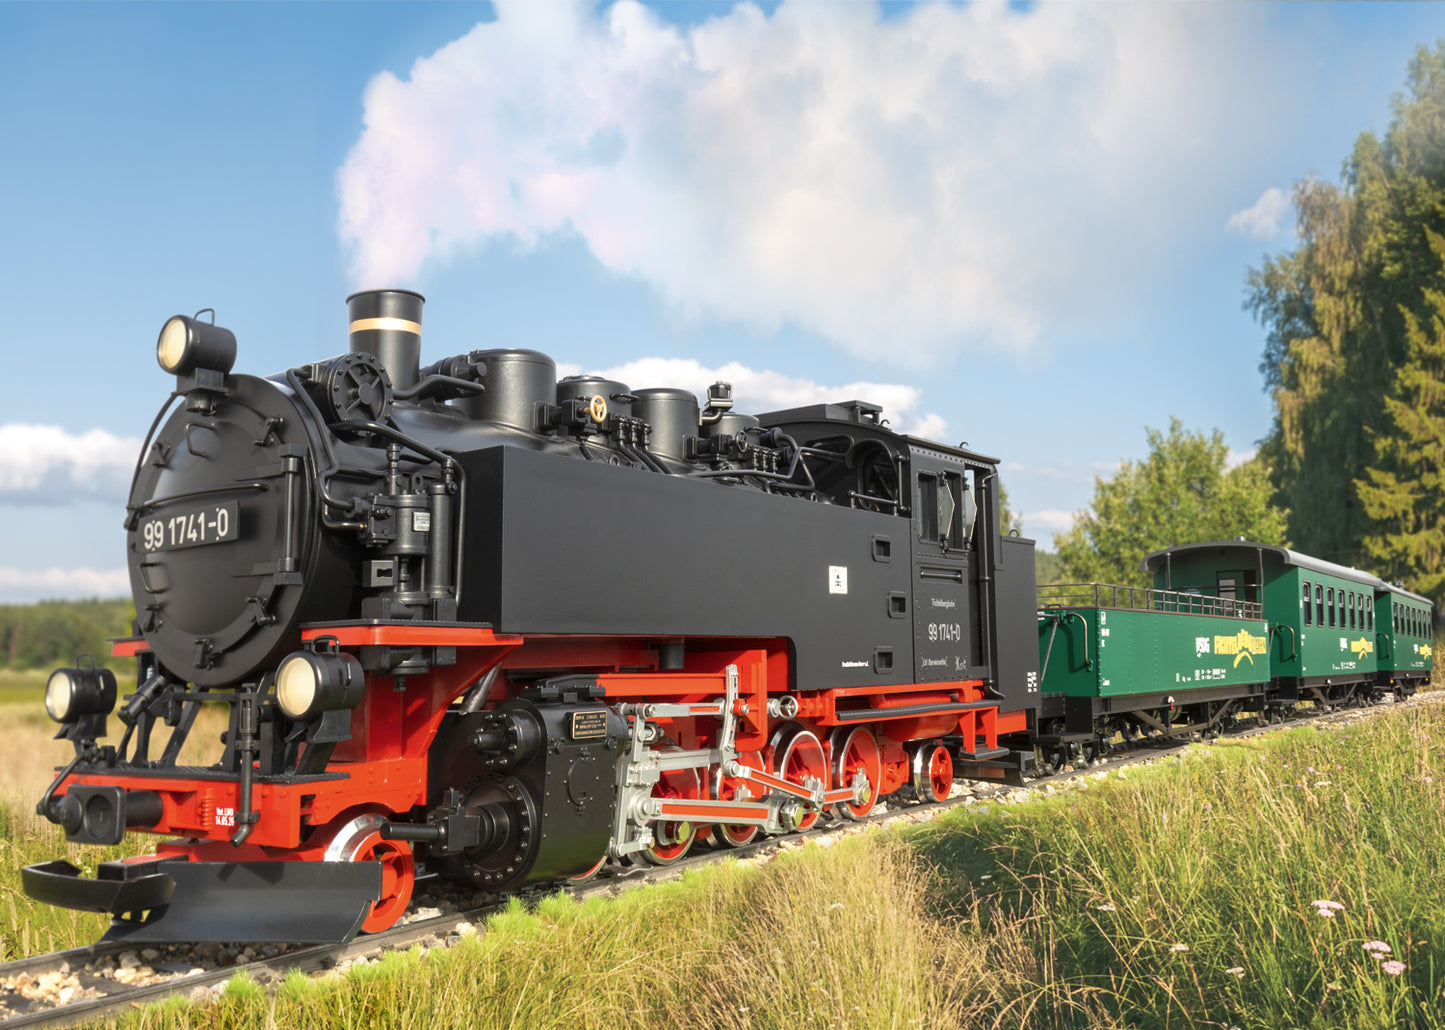 LGB 21481 - SDG Steam Locomotive, Road Number 99 1741